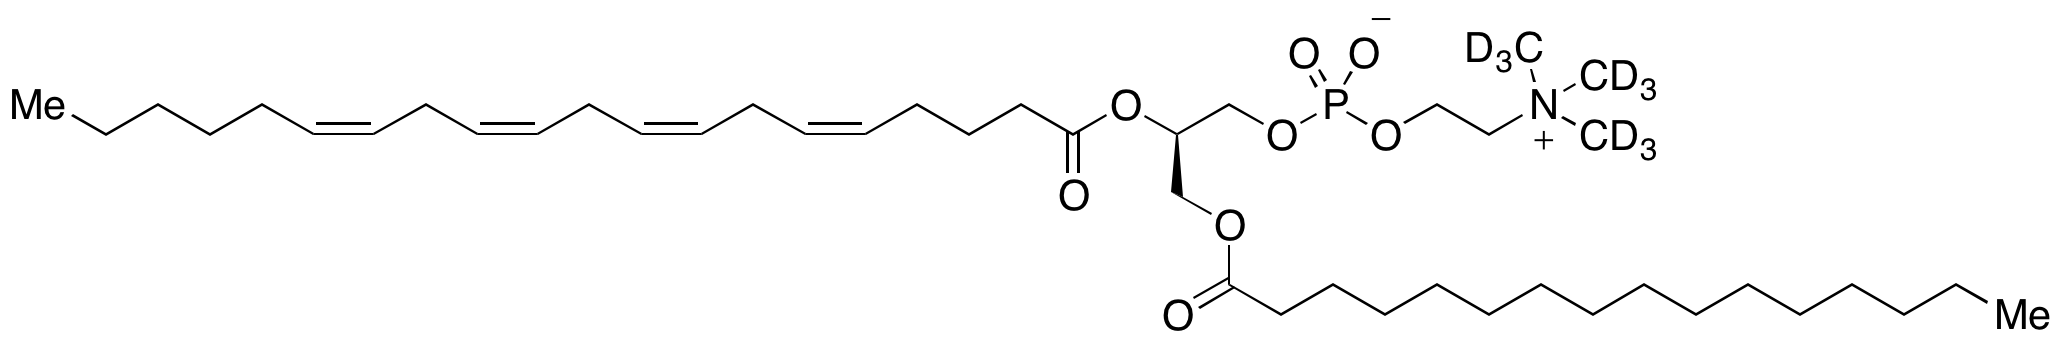 1-Palmitoyl-2-arachidoyllecithin-d9